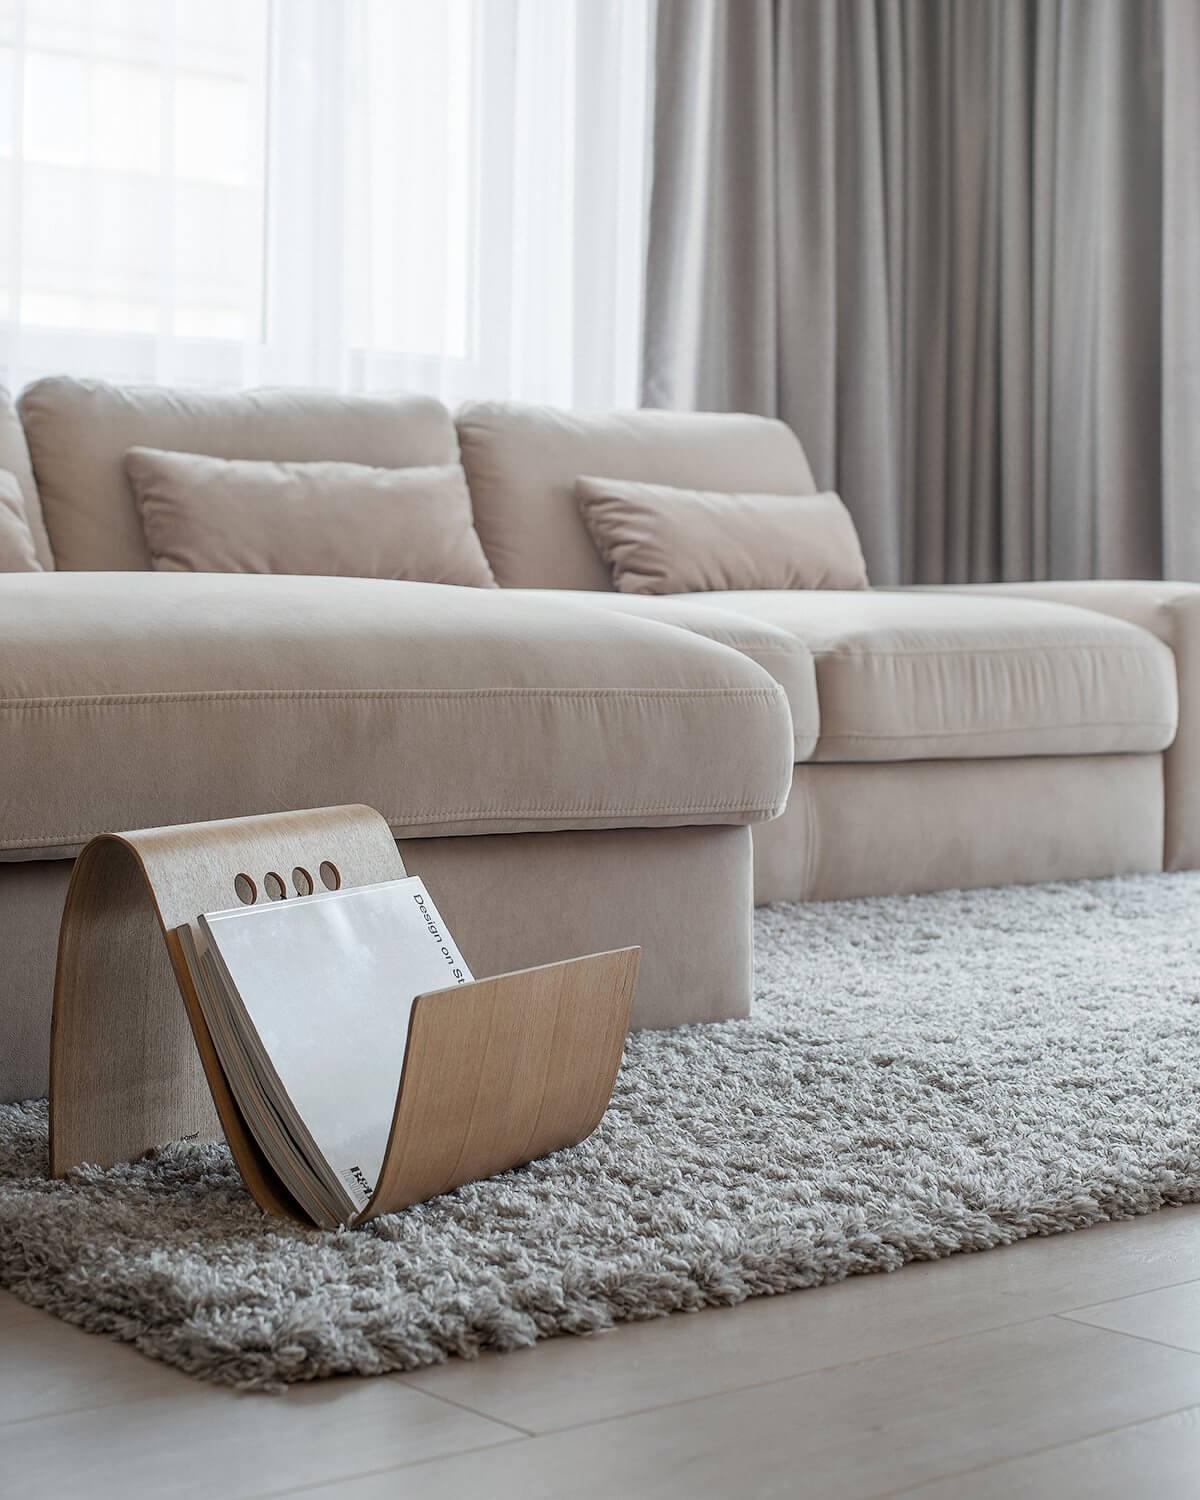 Avia apartment living room sofa - cgi visualization